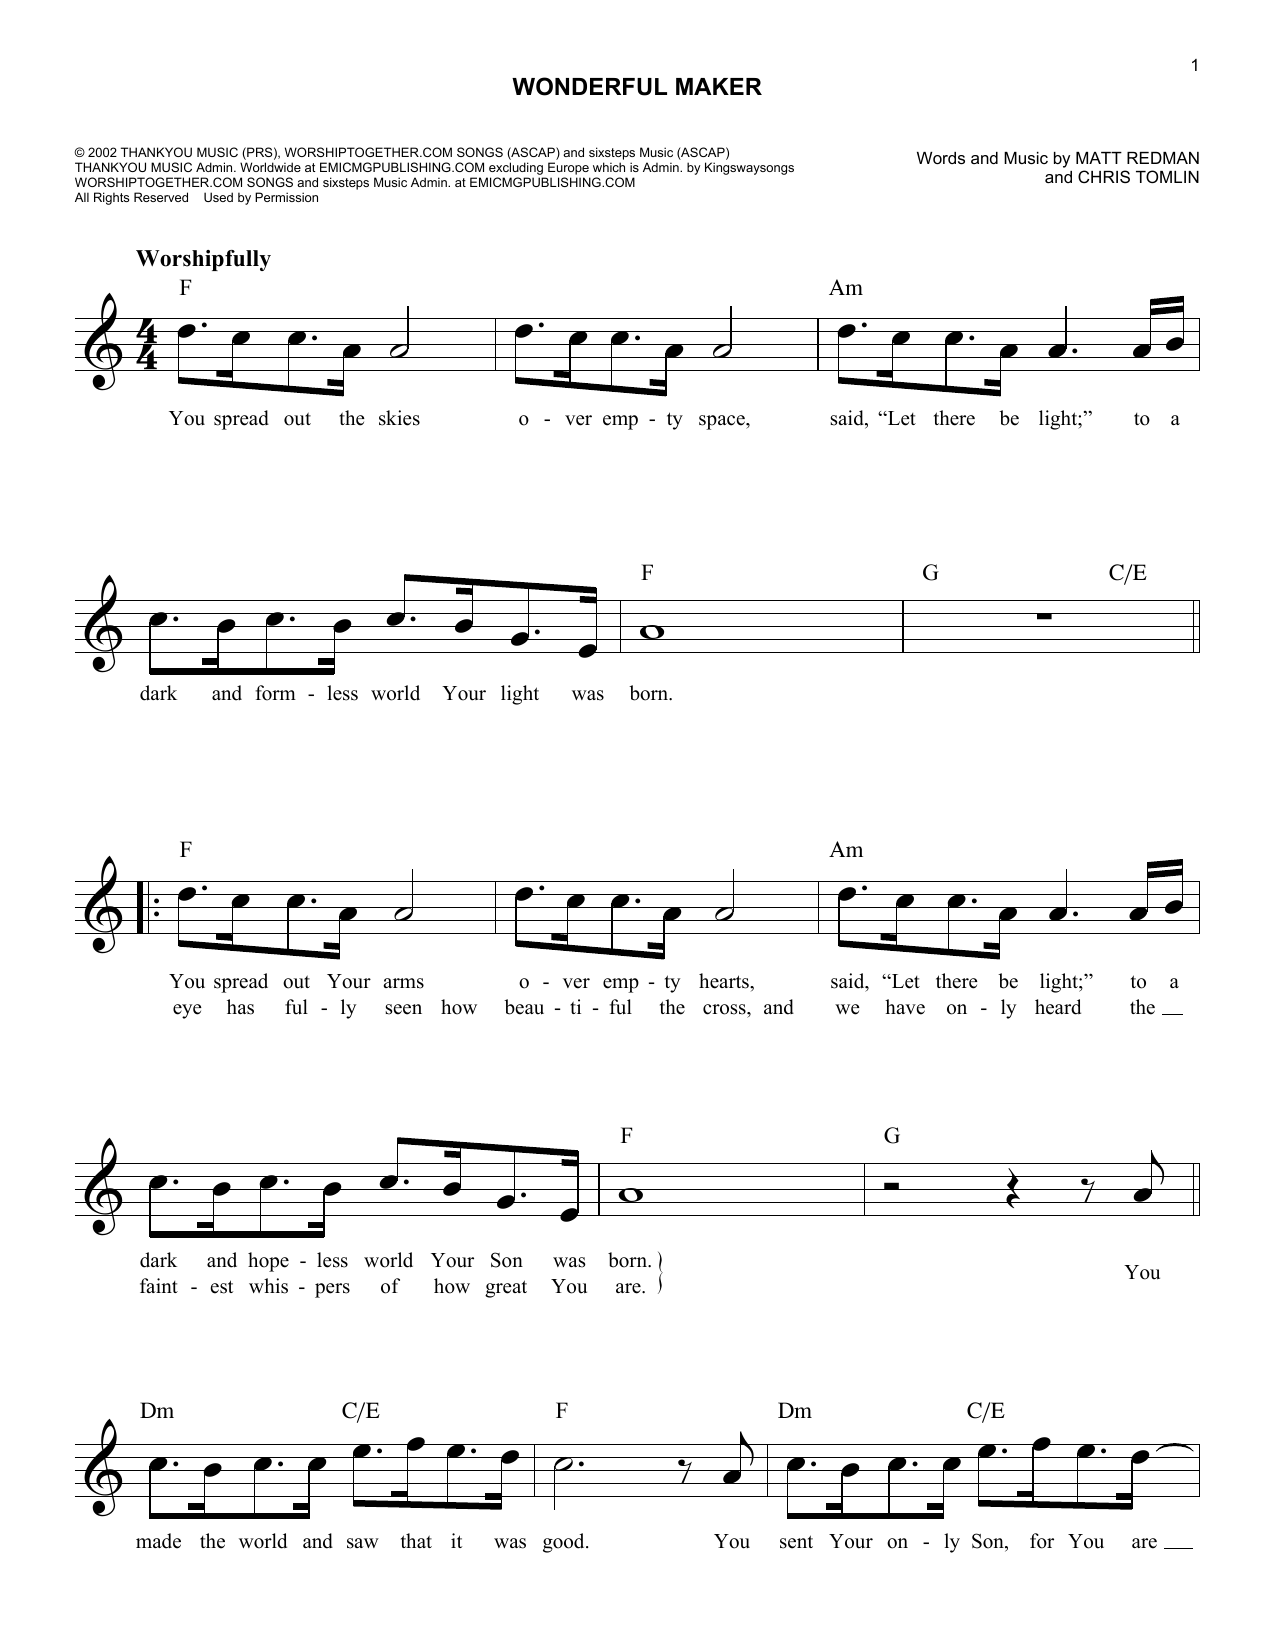 Matt Redman Wonderful Maker Sheet Music Notes & Chords for Melody Line, Lyrics & Chords - Download or Print PDF